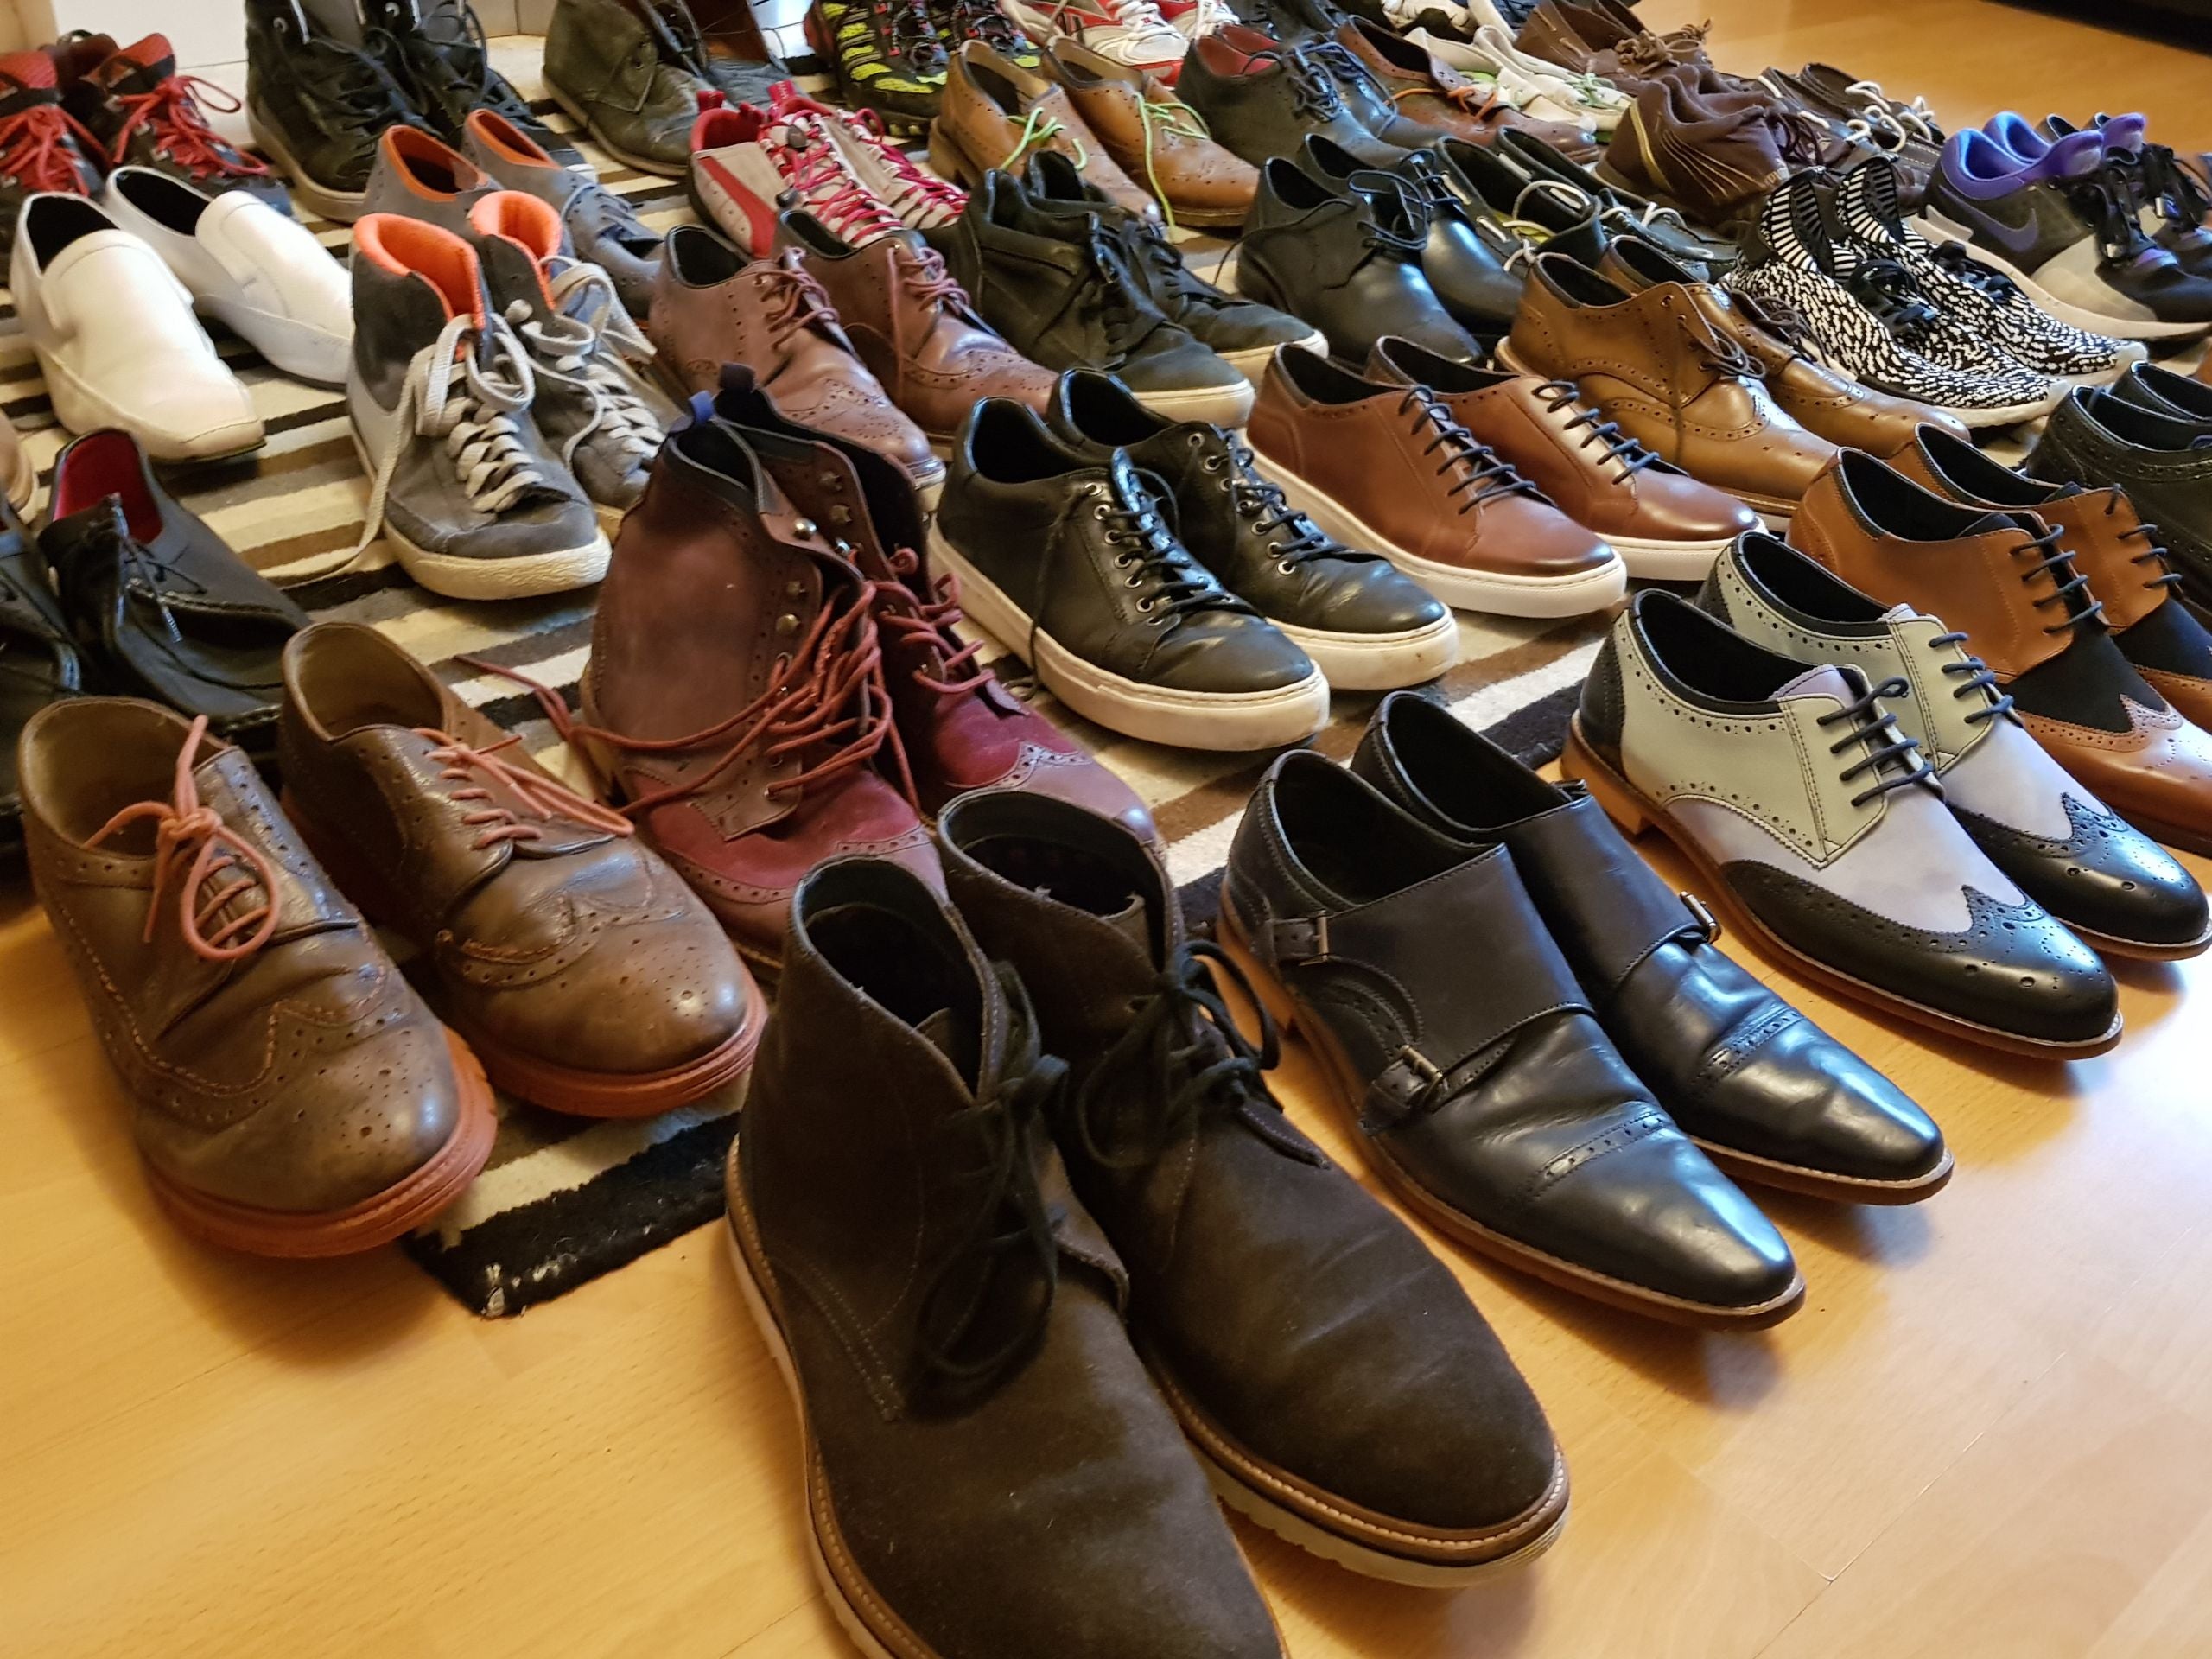 northerner boots retailers